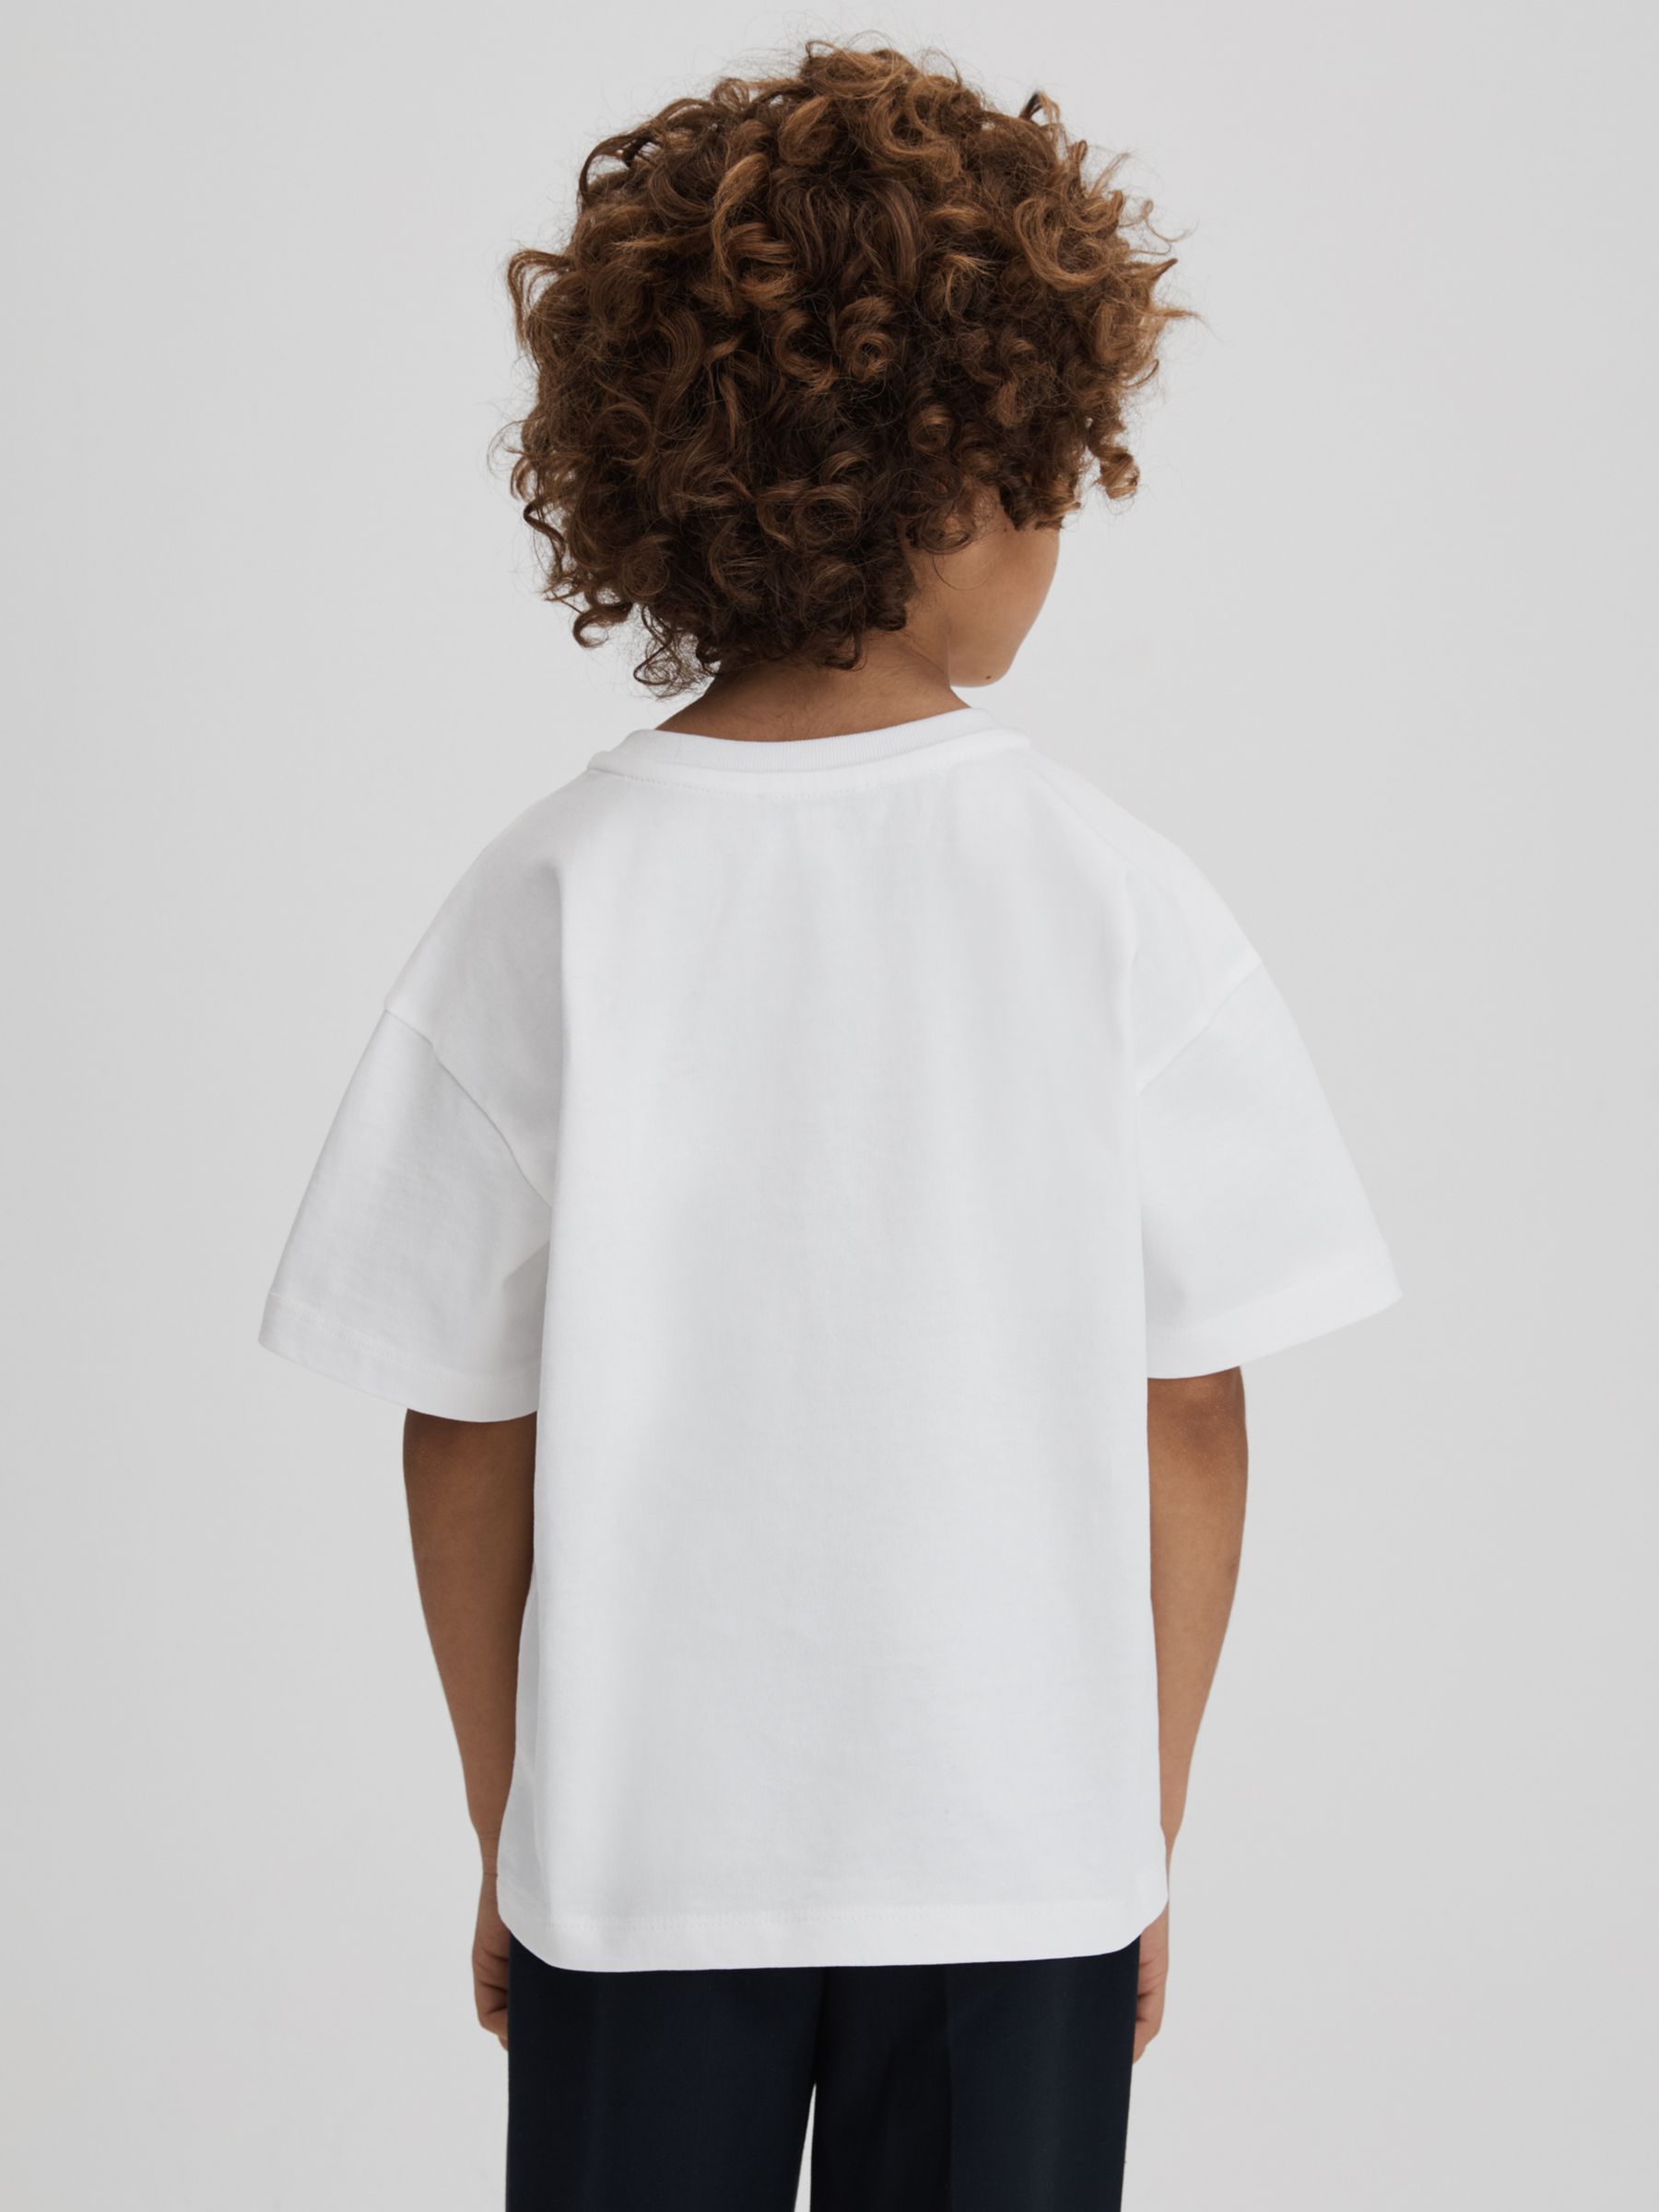 Reiss Kids' Selby Oversized Crew Neck T-Shirt, White, 5-6 years